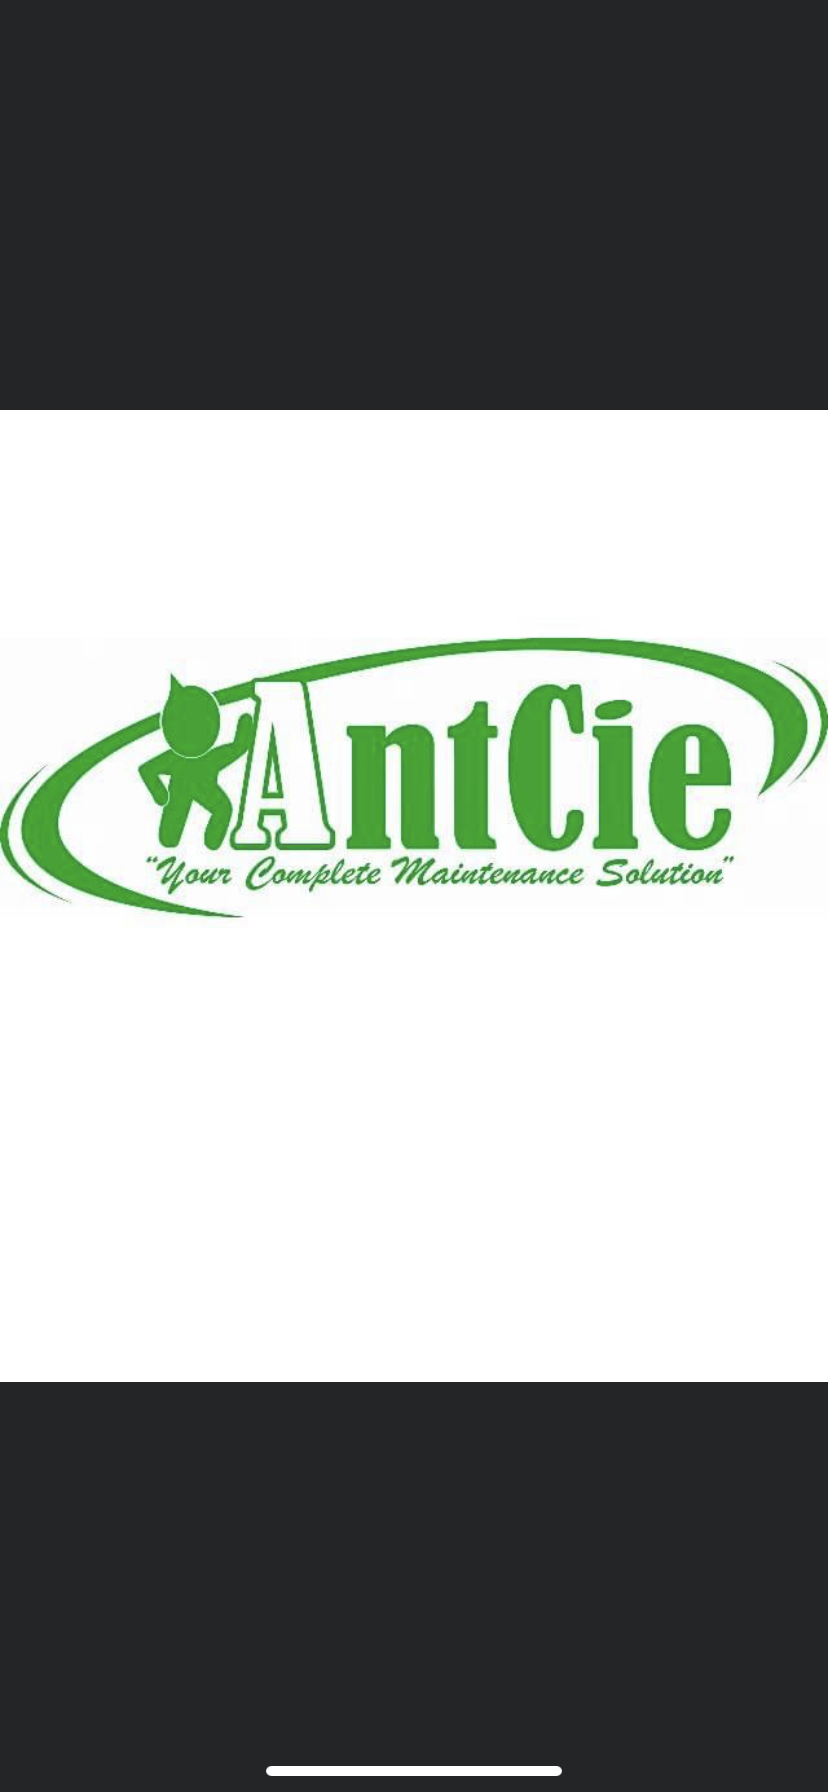 Antcie Maintenance Services, LLC Logo